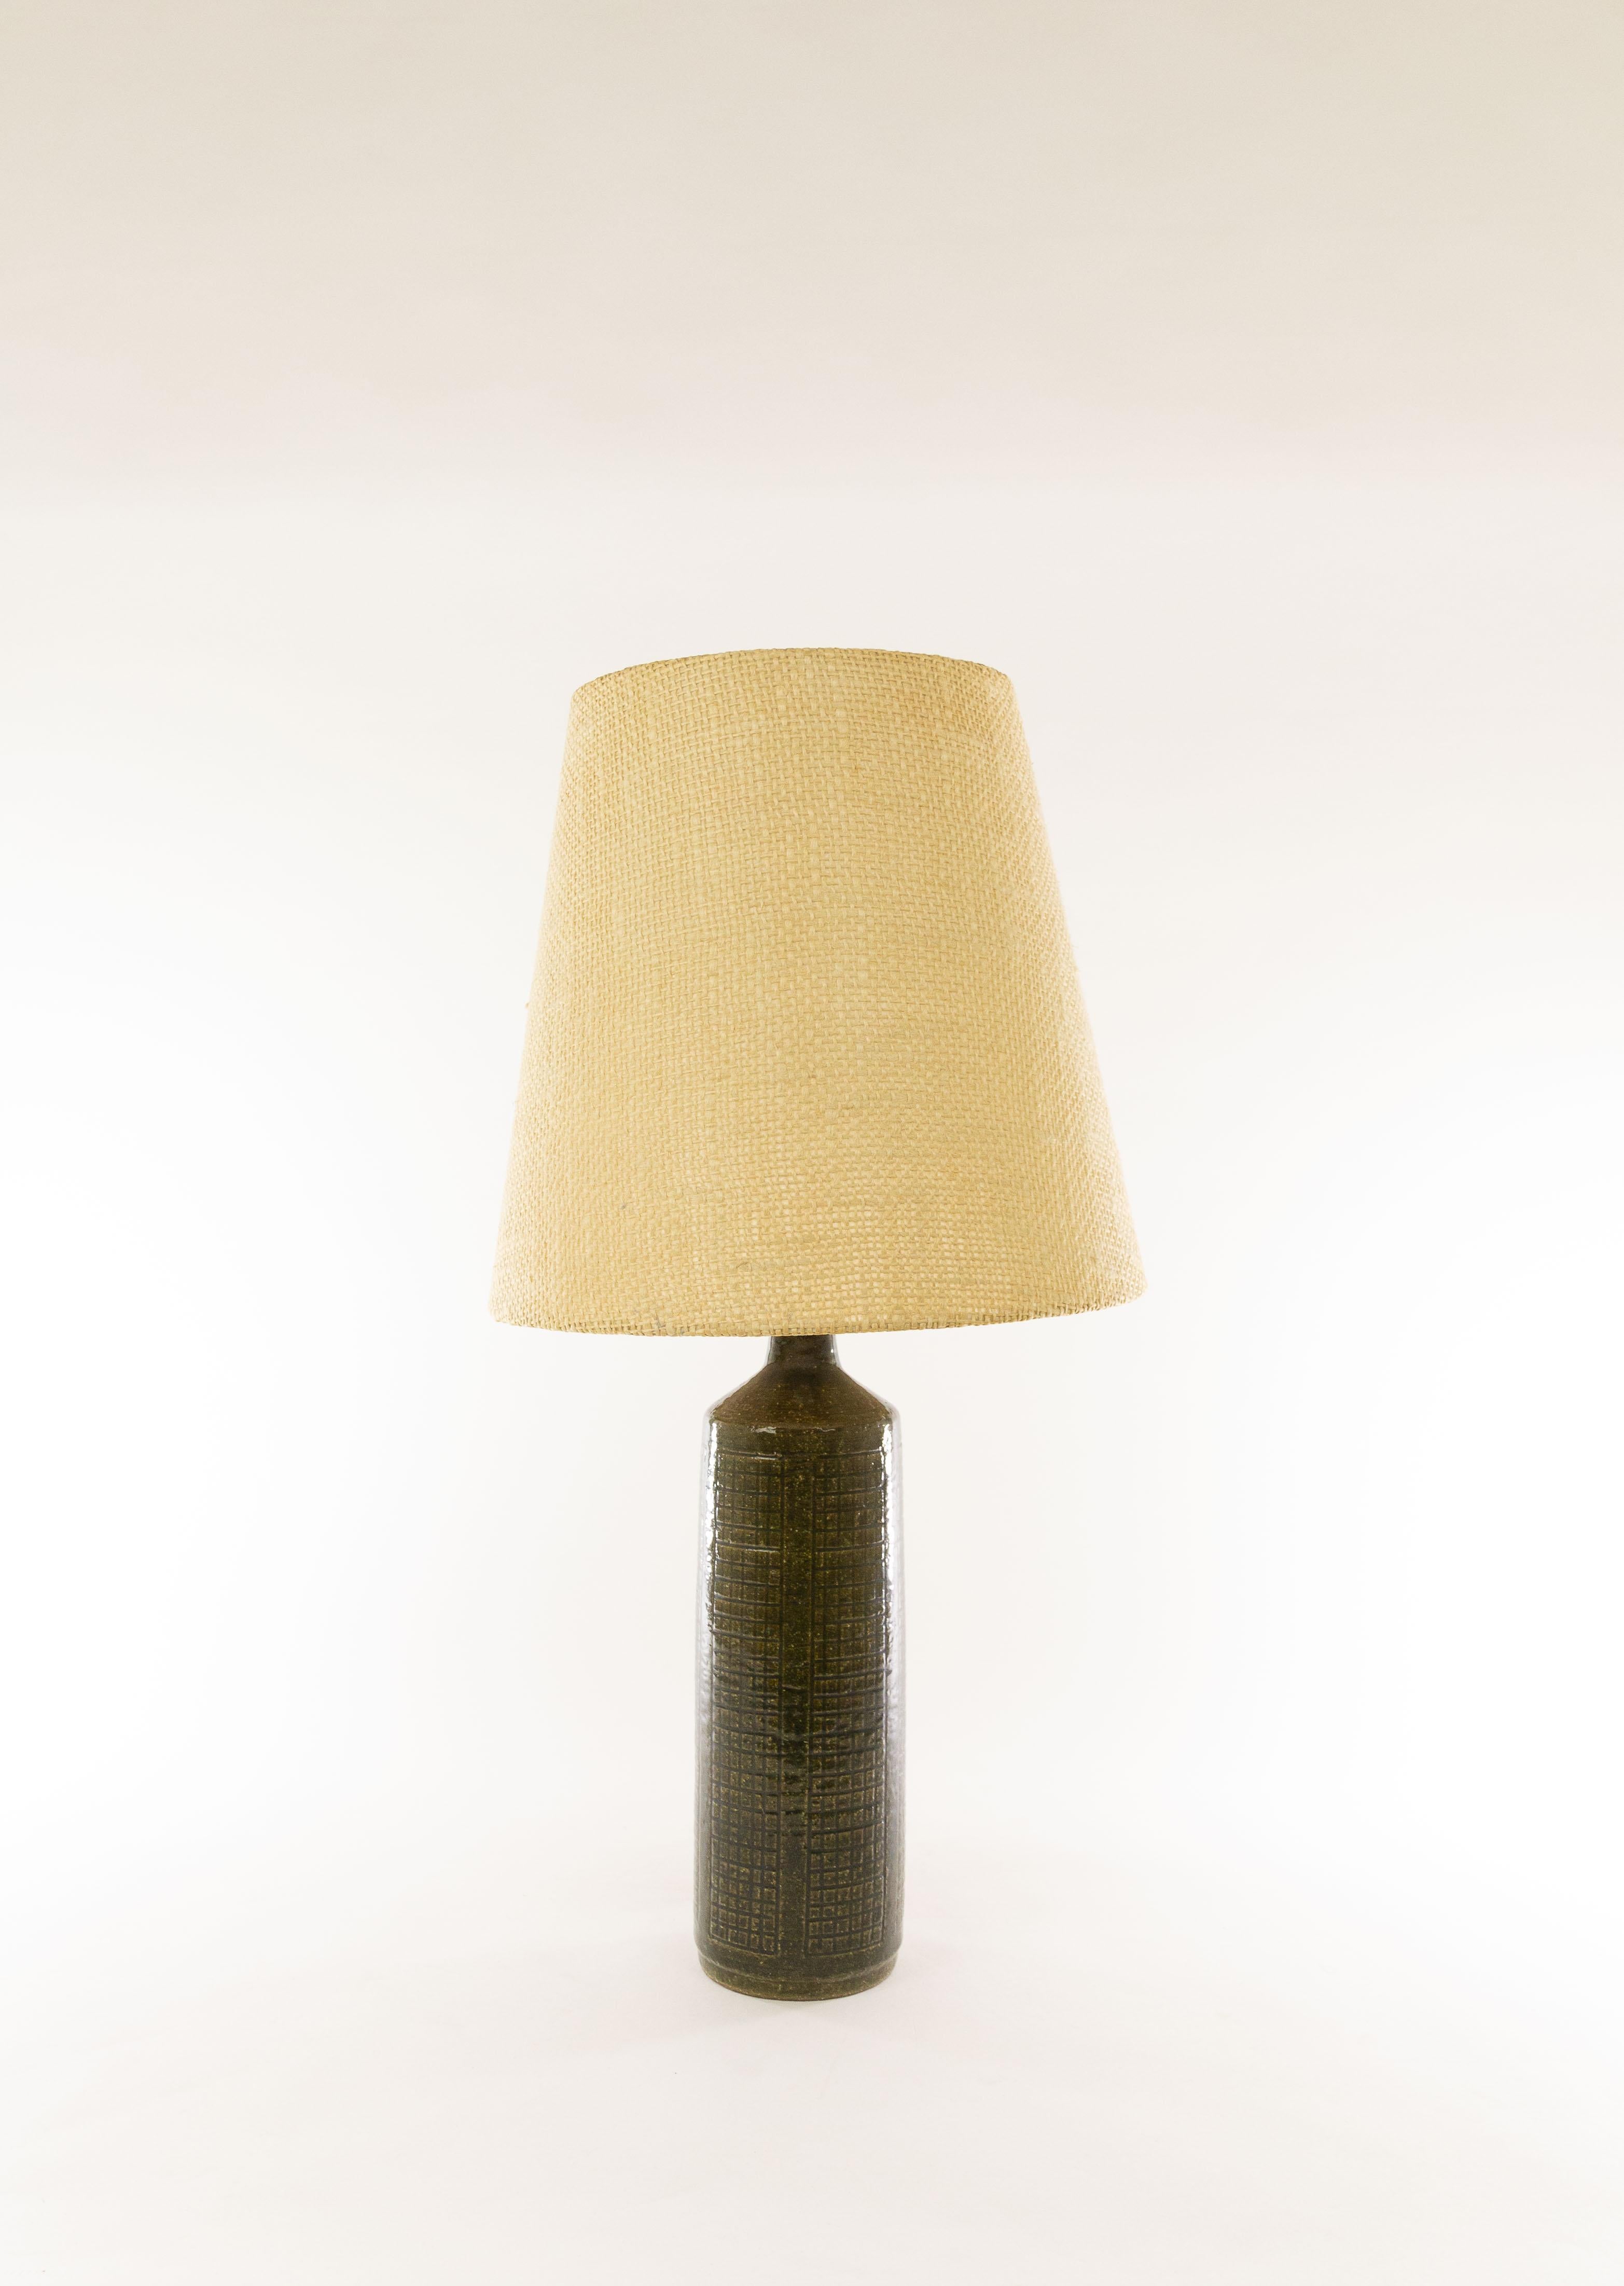 dl lamp